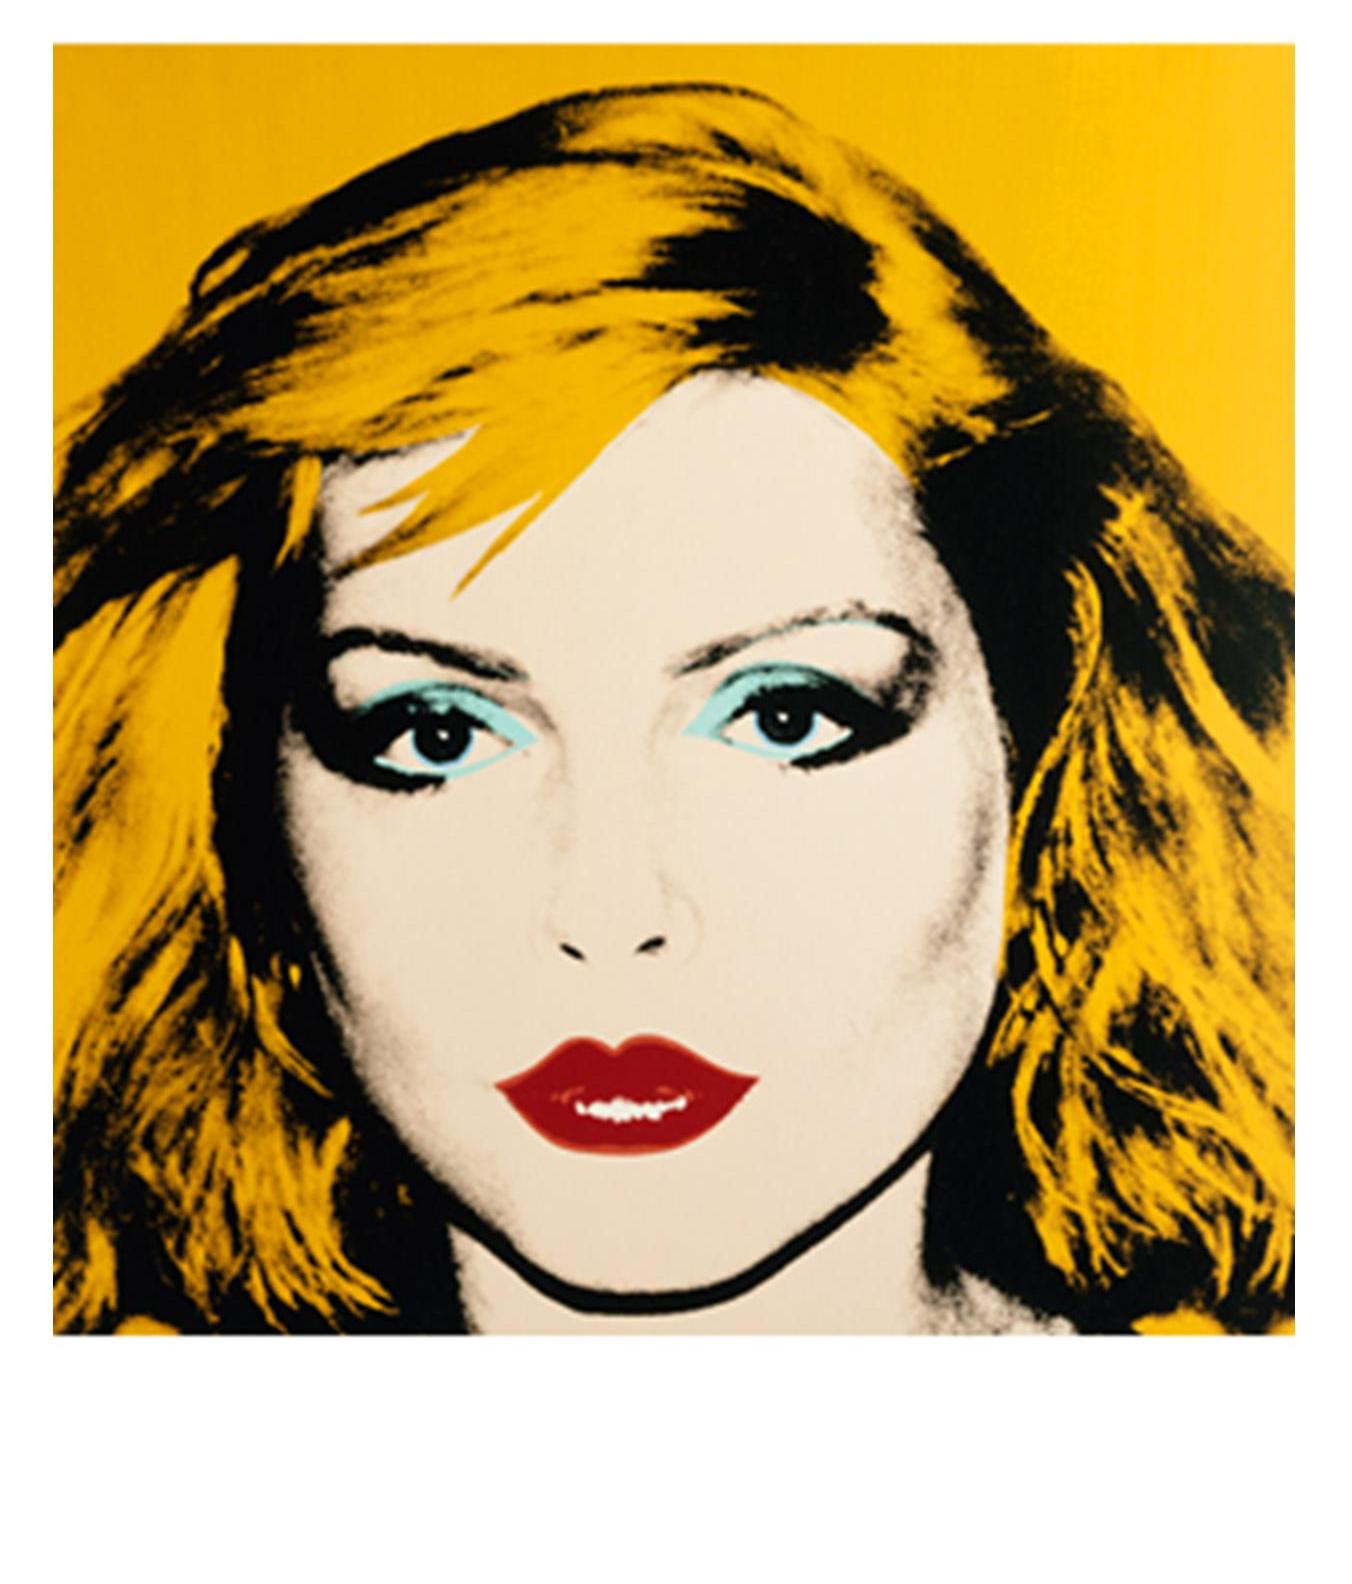 http://1.bp.blogspot.com/-n9bXpKGVzOM/T6x_4GVojFI/AAAAAAAAAUY/ADno6fCzjGs/s1600/Blondie-Andy+Warhol+Screen+Print.jpg